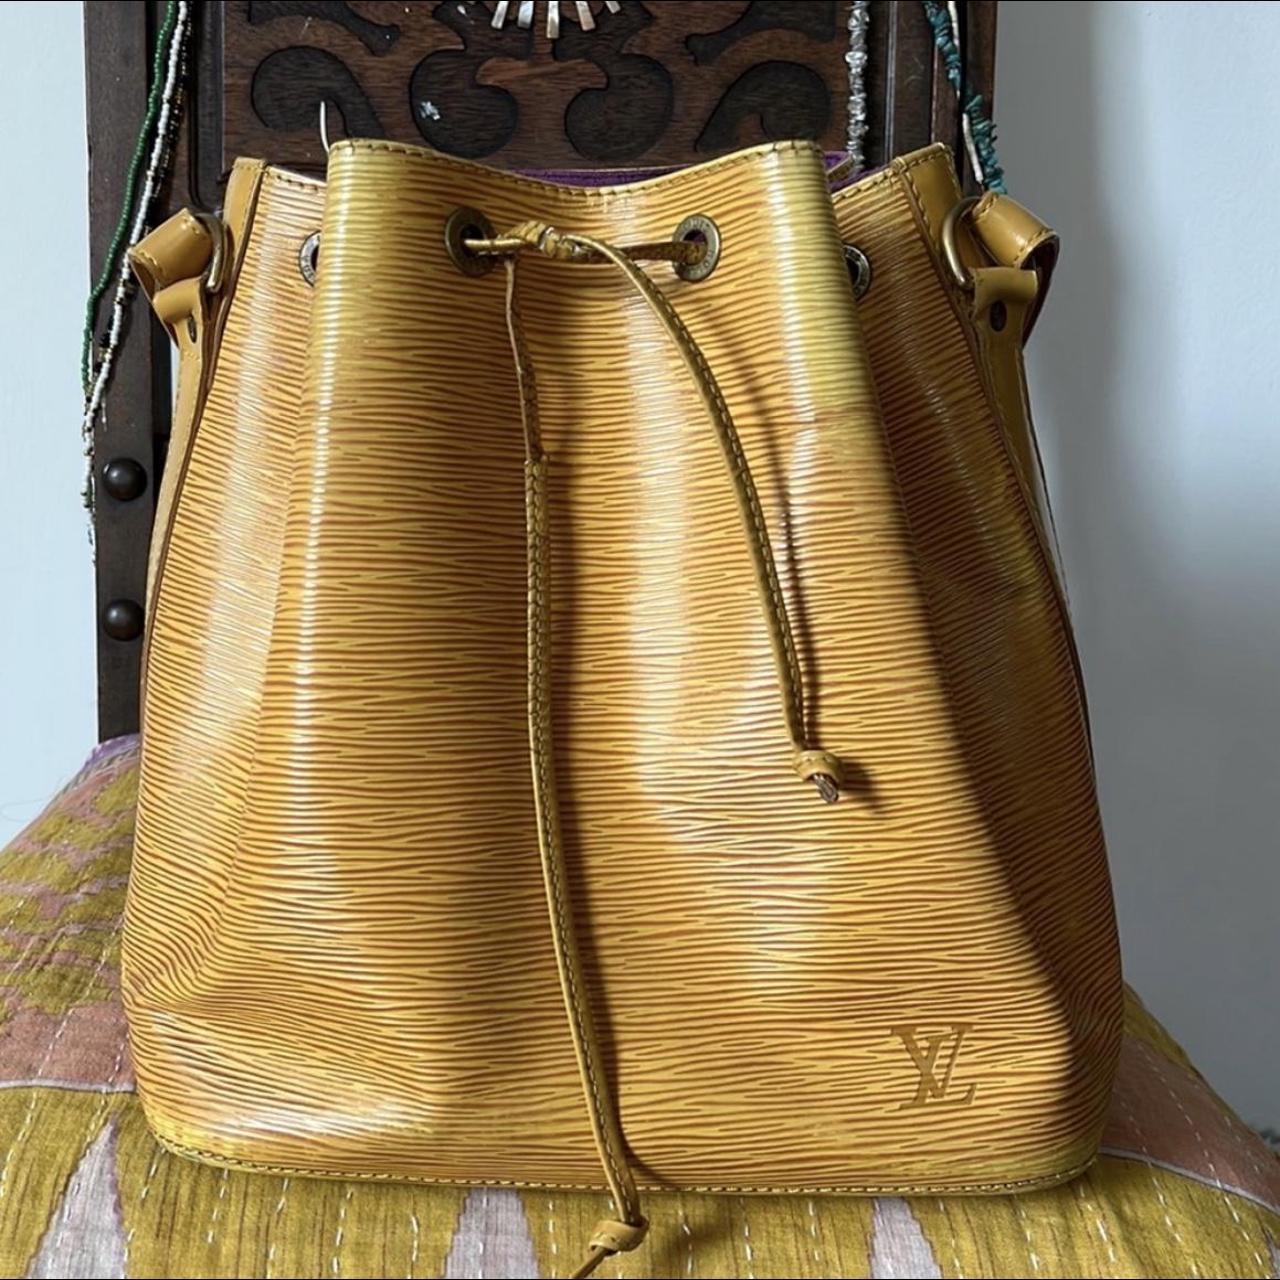 Authentic Louis Vuitton messenger bag. Worn like 5 - Depop